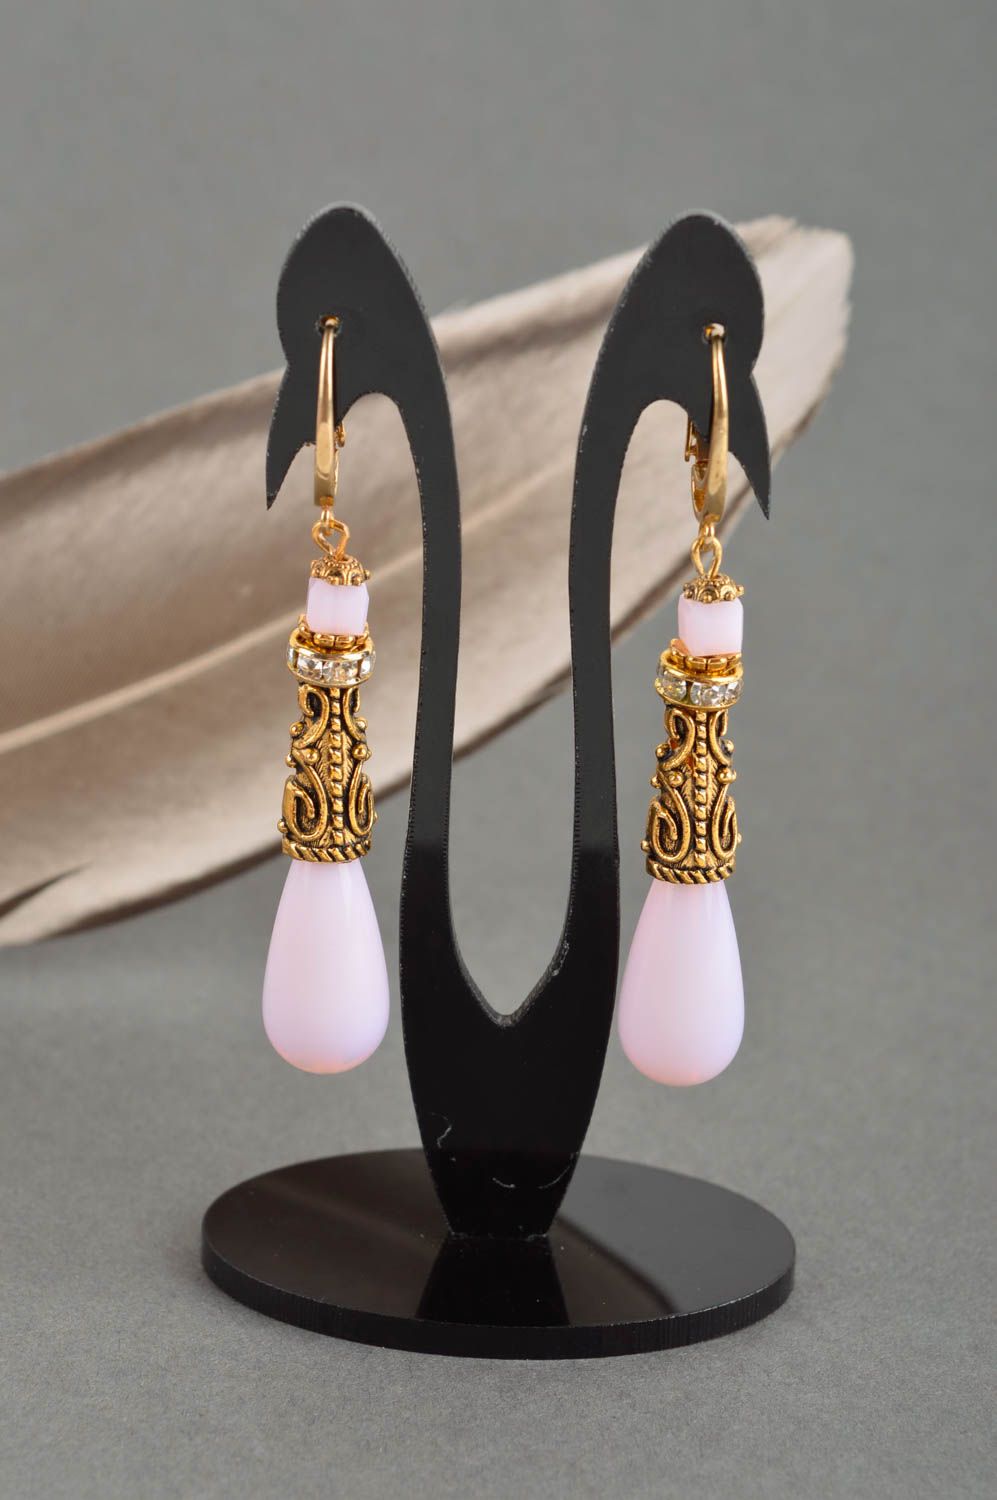 Handmade earrings gemstone jewelry earrings for girls designer accessories photo 1